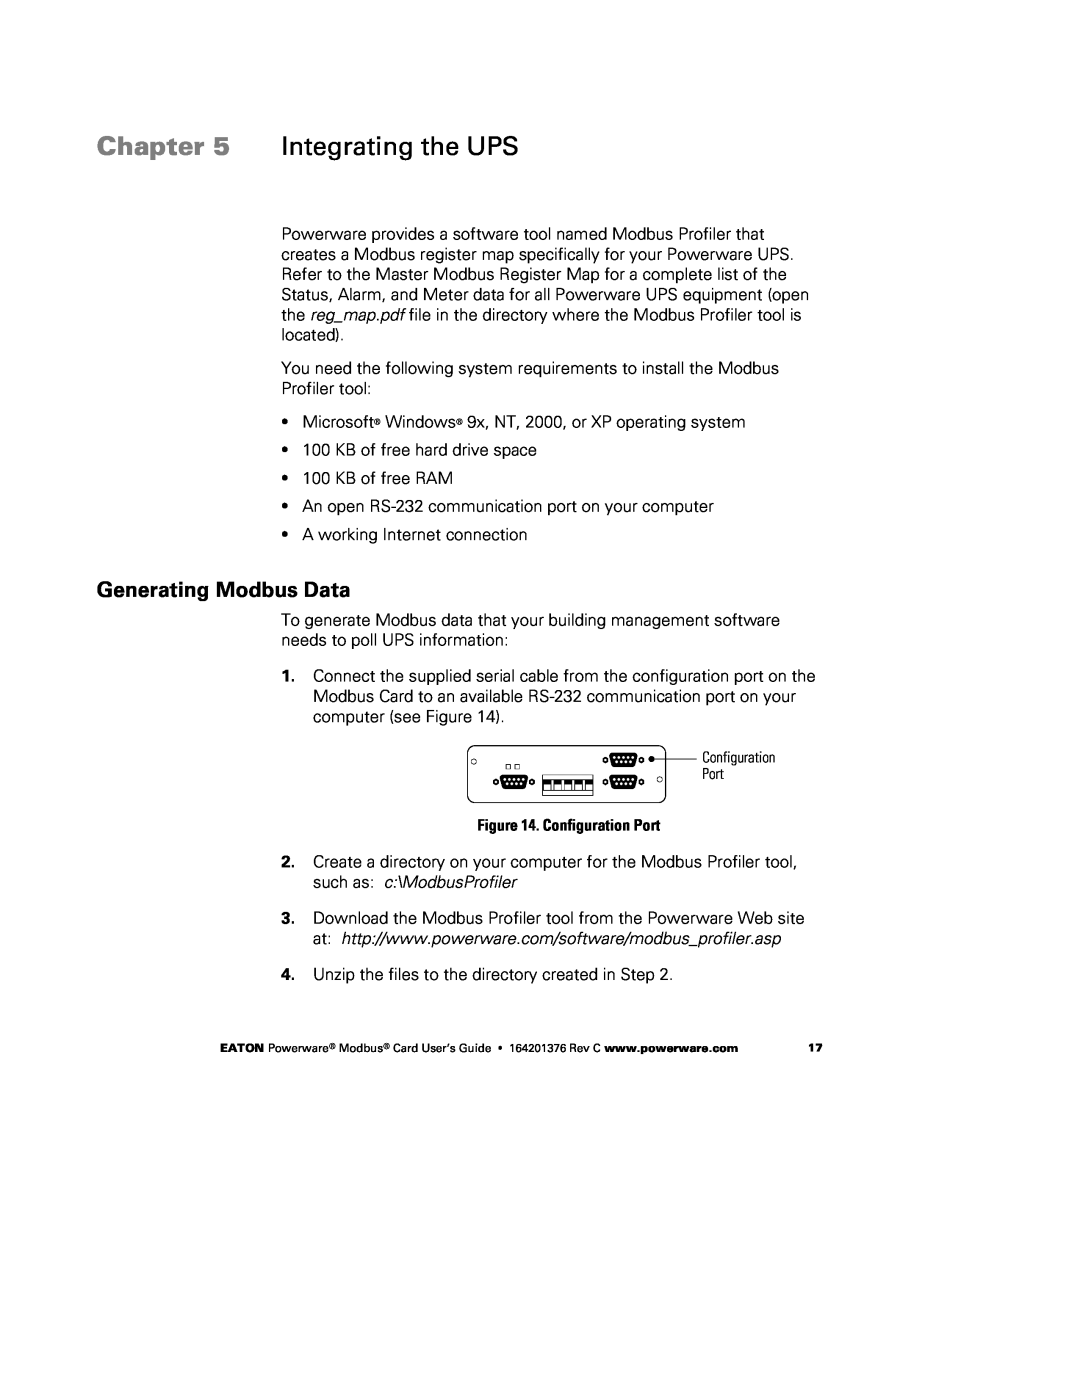 Powerware FCC 15 manual Integrating the UPS, Generating Modbus Data 